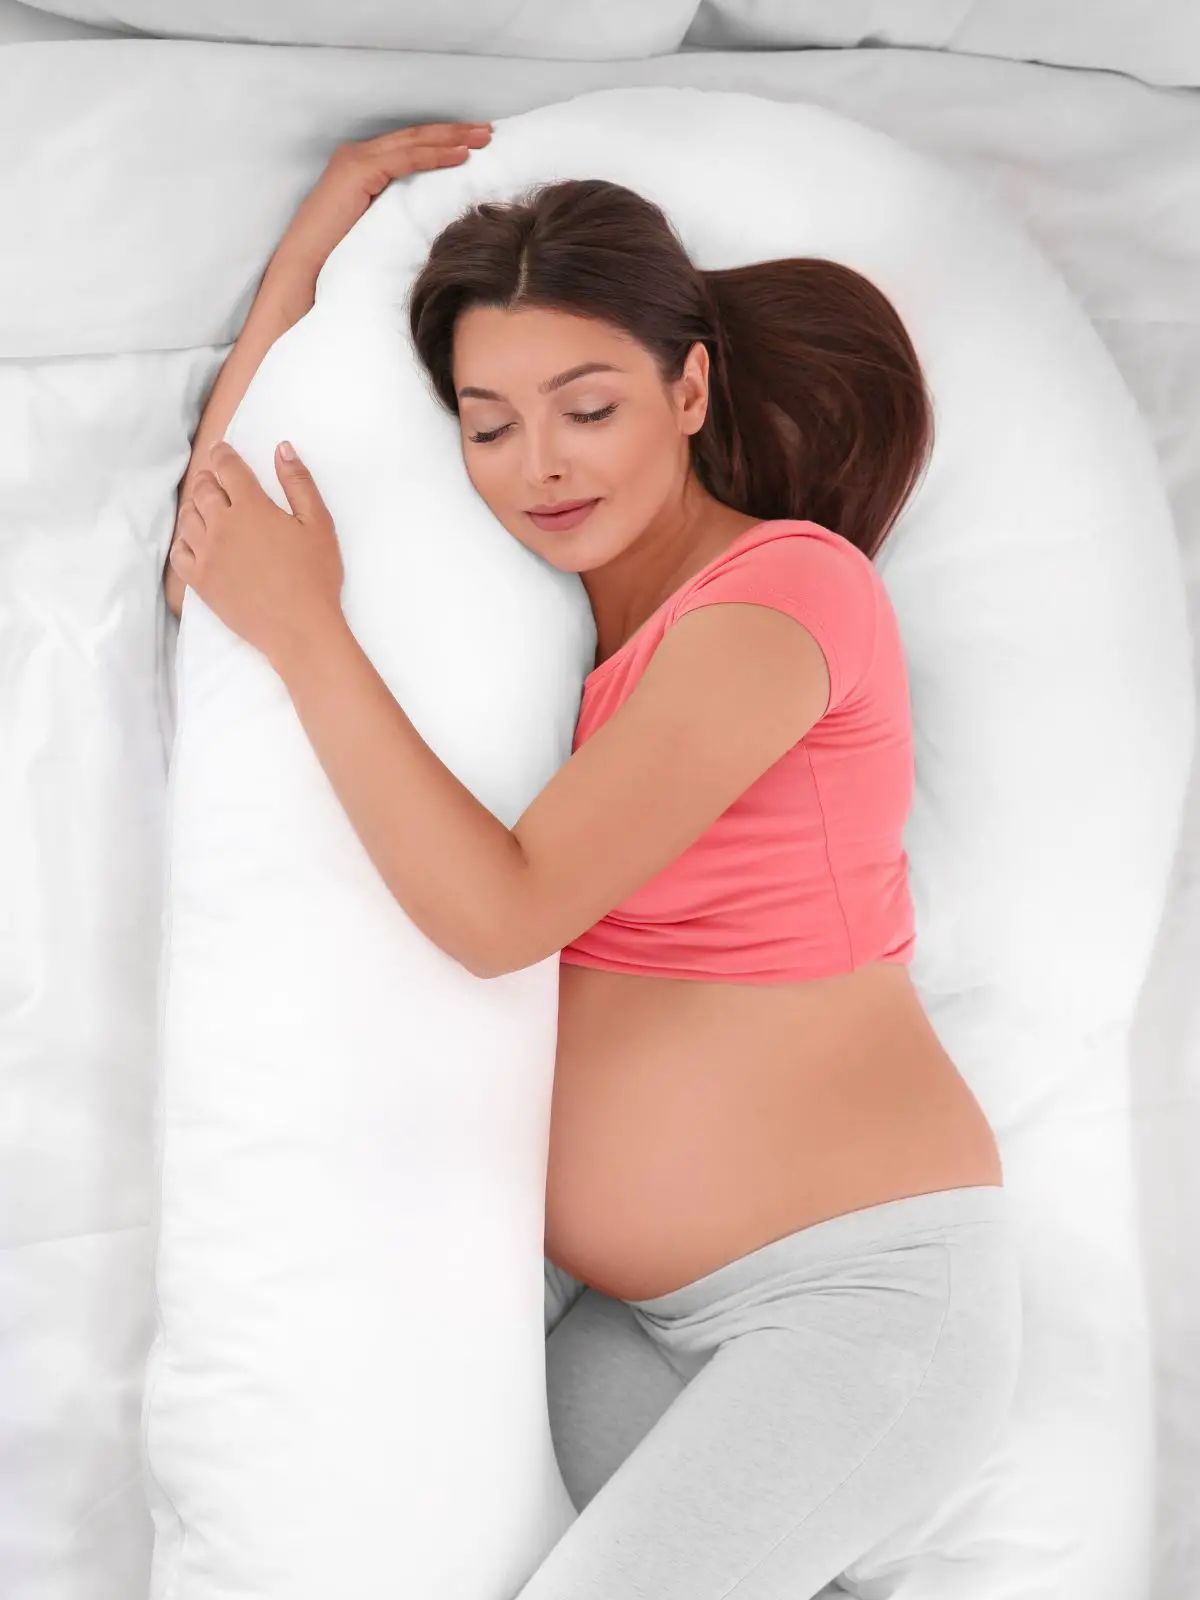 sleeping while pregnant